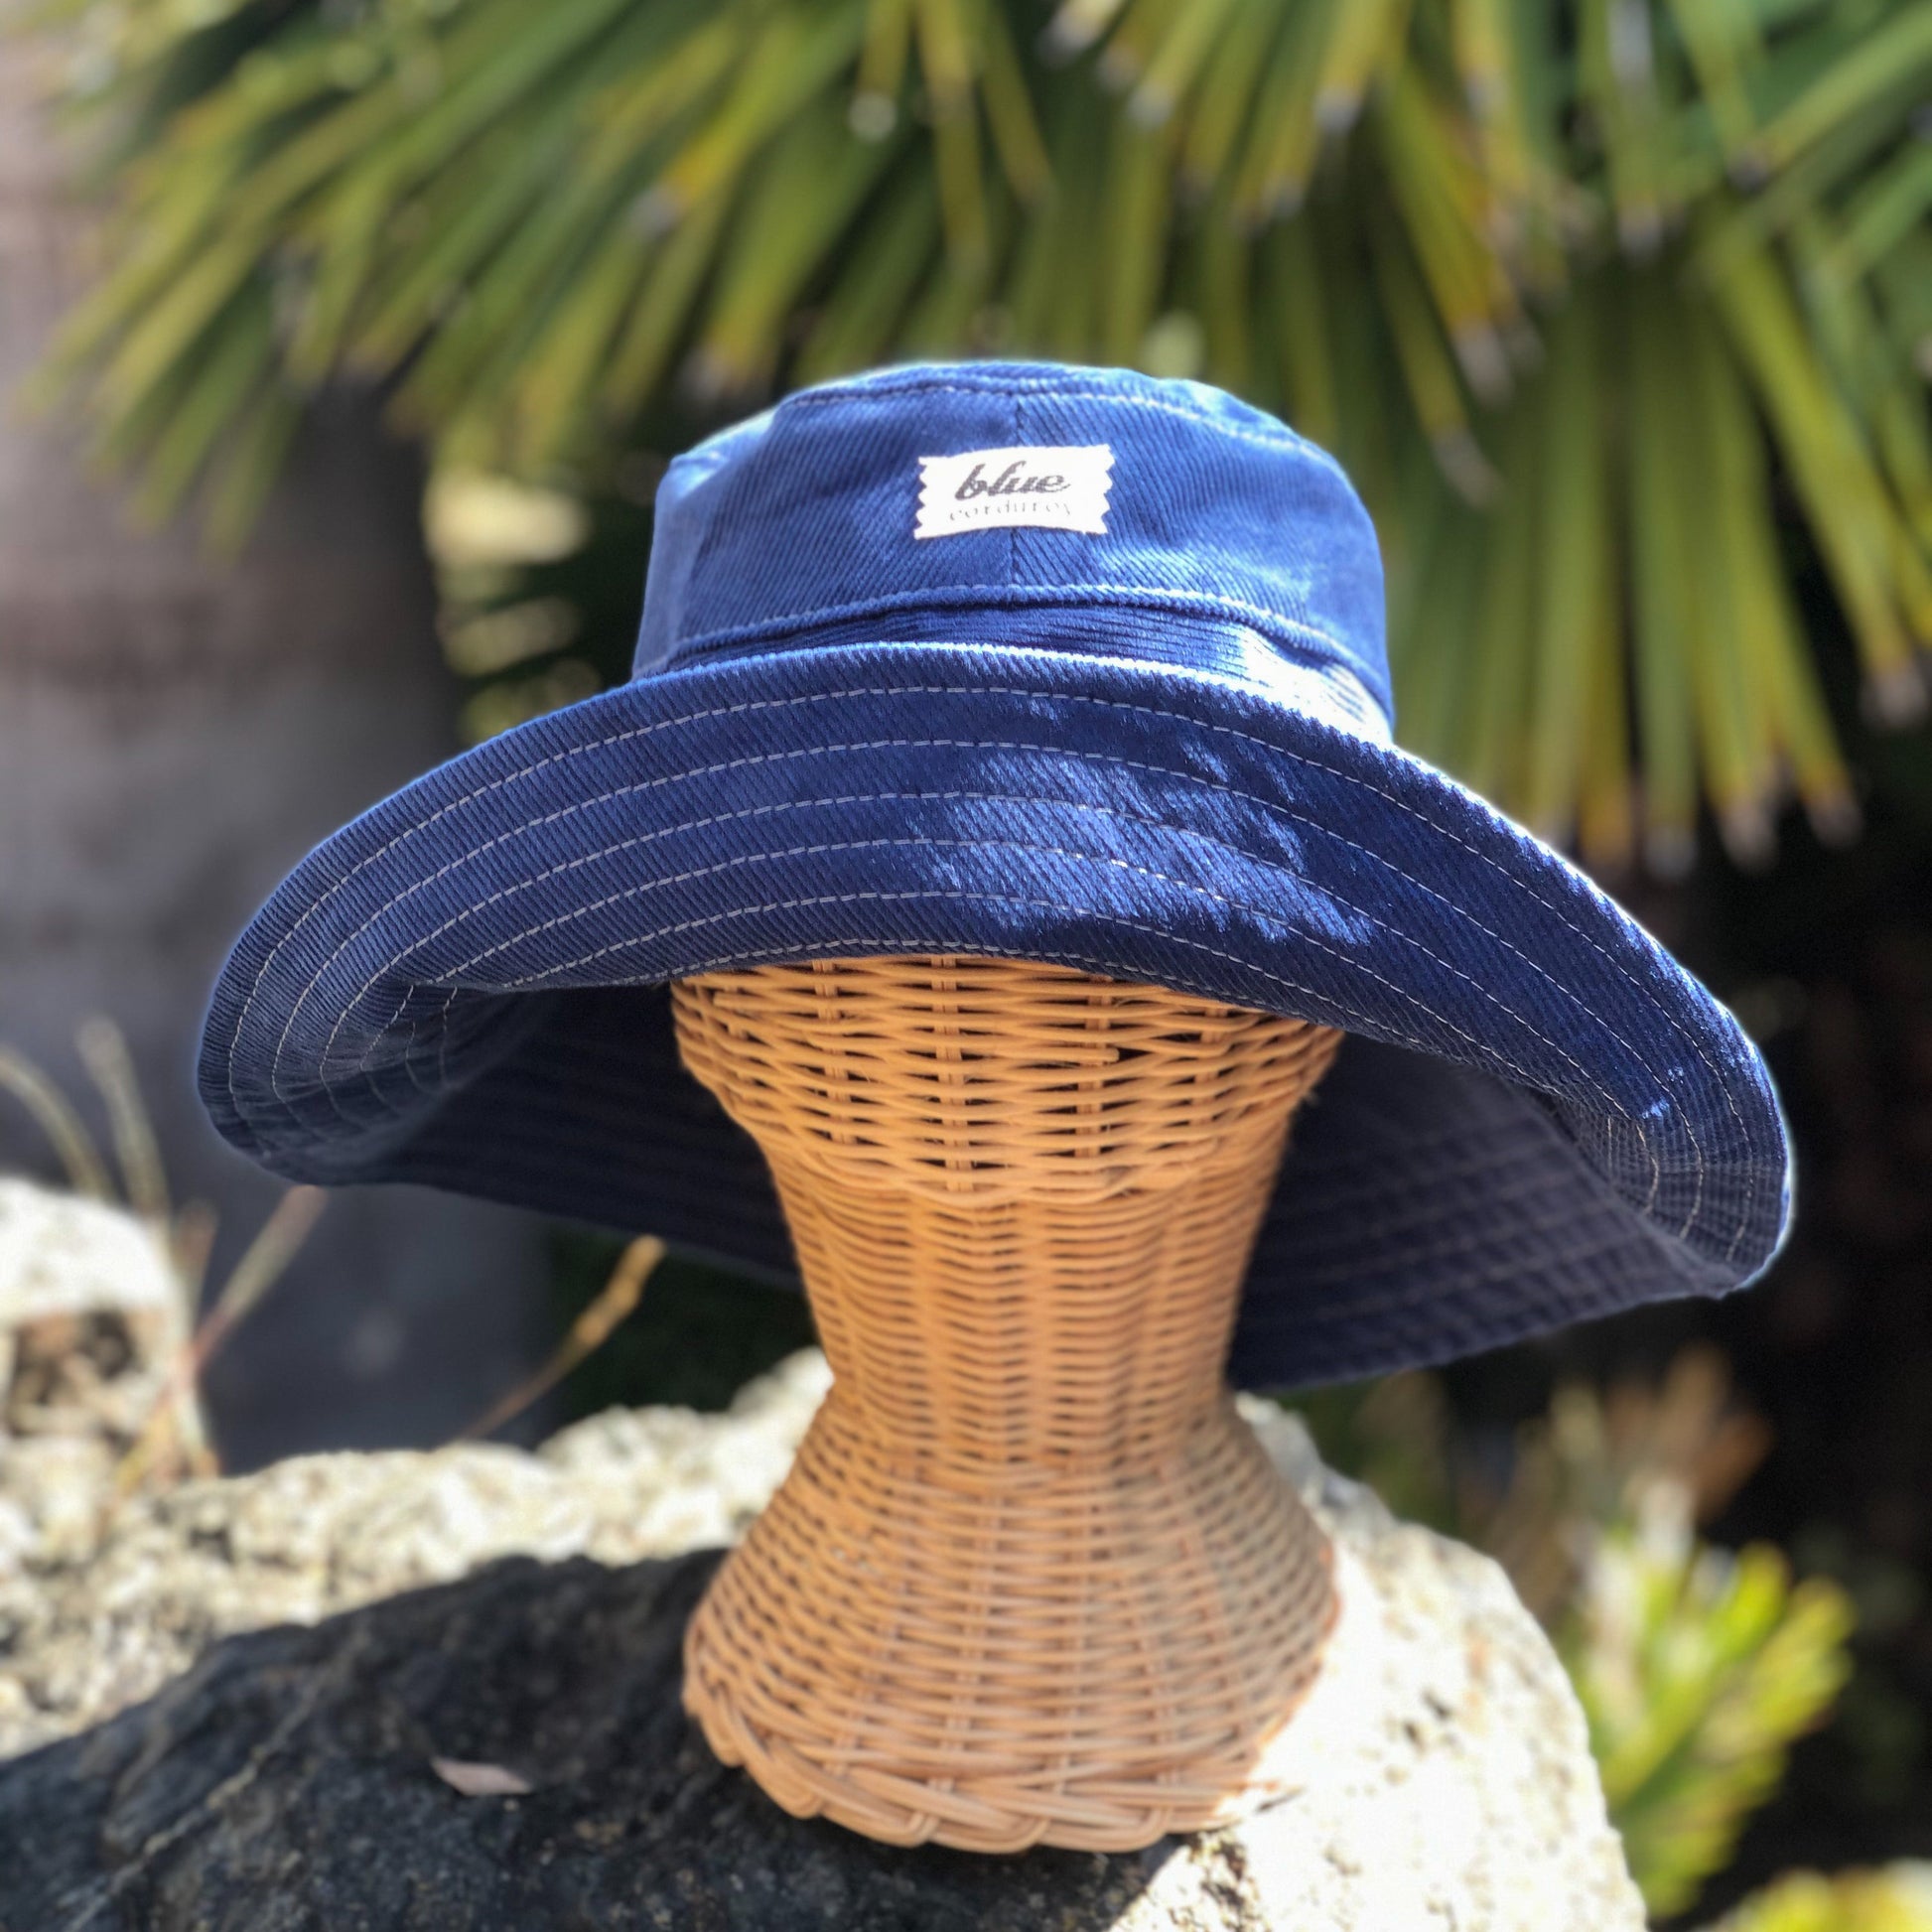 Bright Blue corduroy wide brim bucket hat outside on rattan mannequin head.